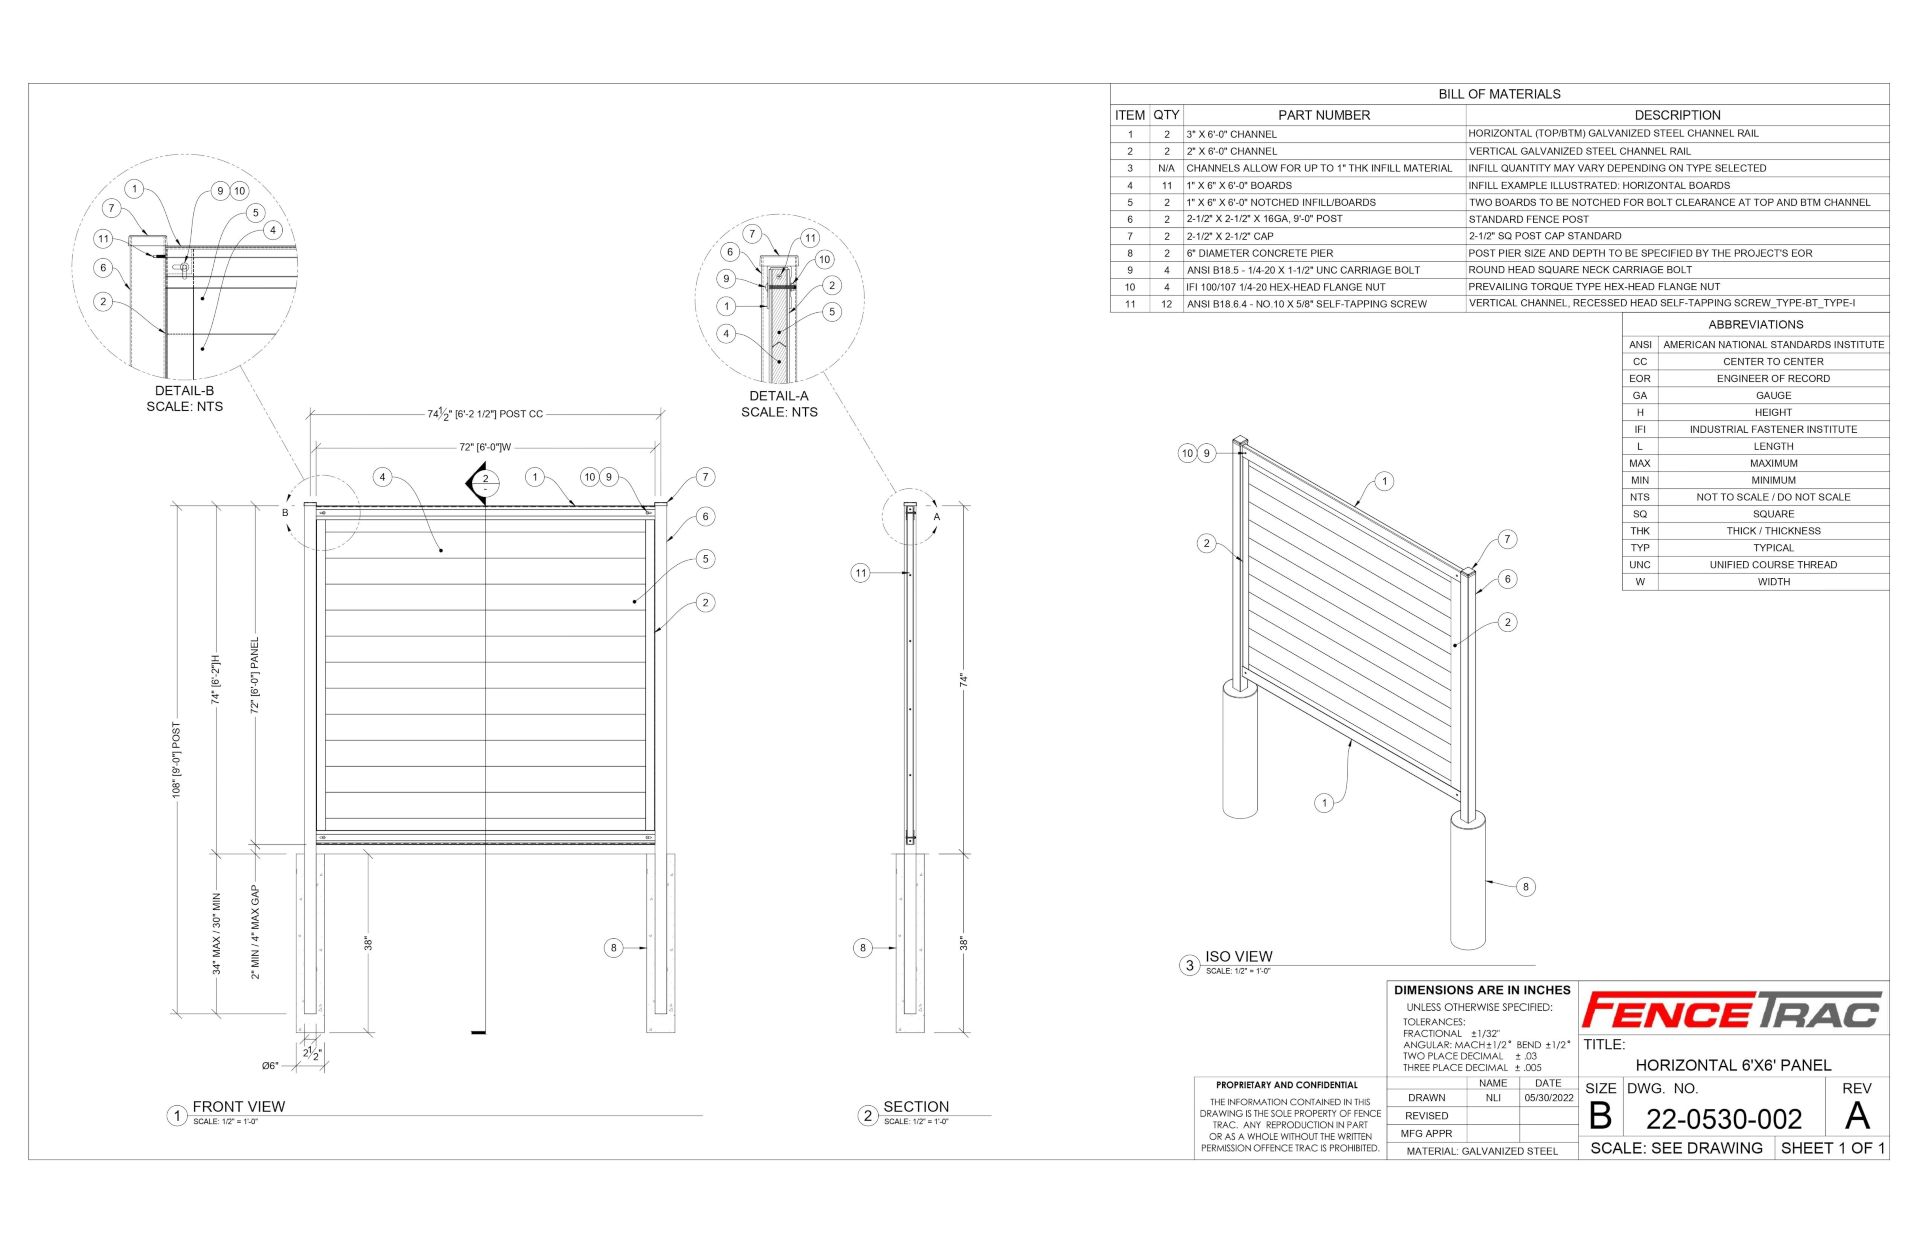 FenceTrac Drawing Horizontal 6x6 Fence Kit Panel